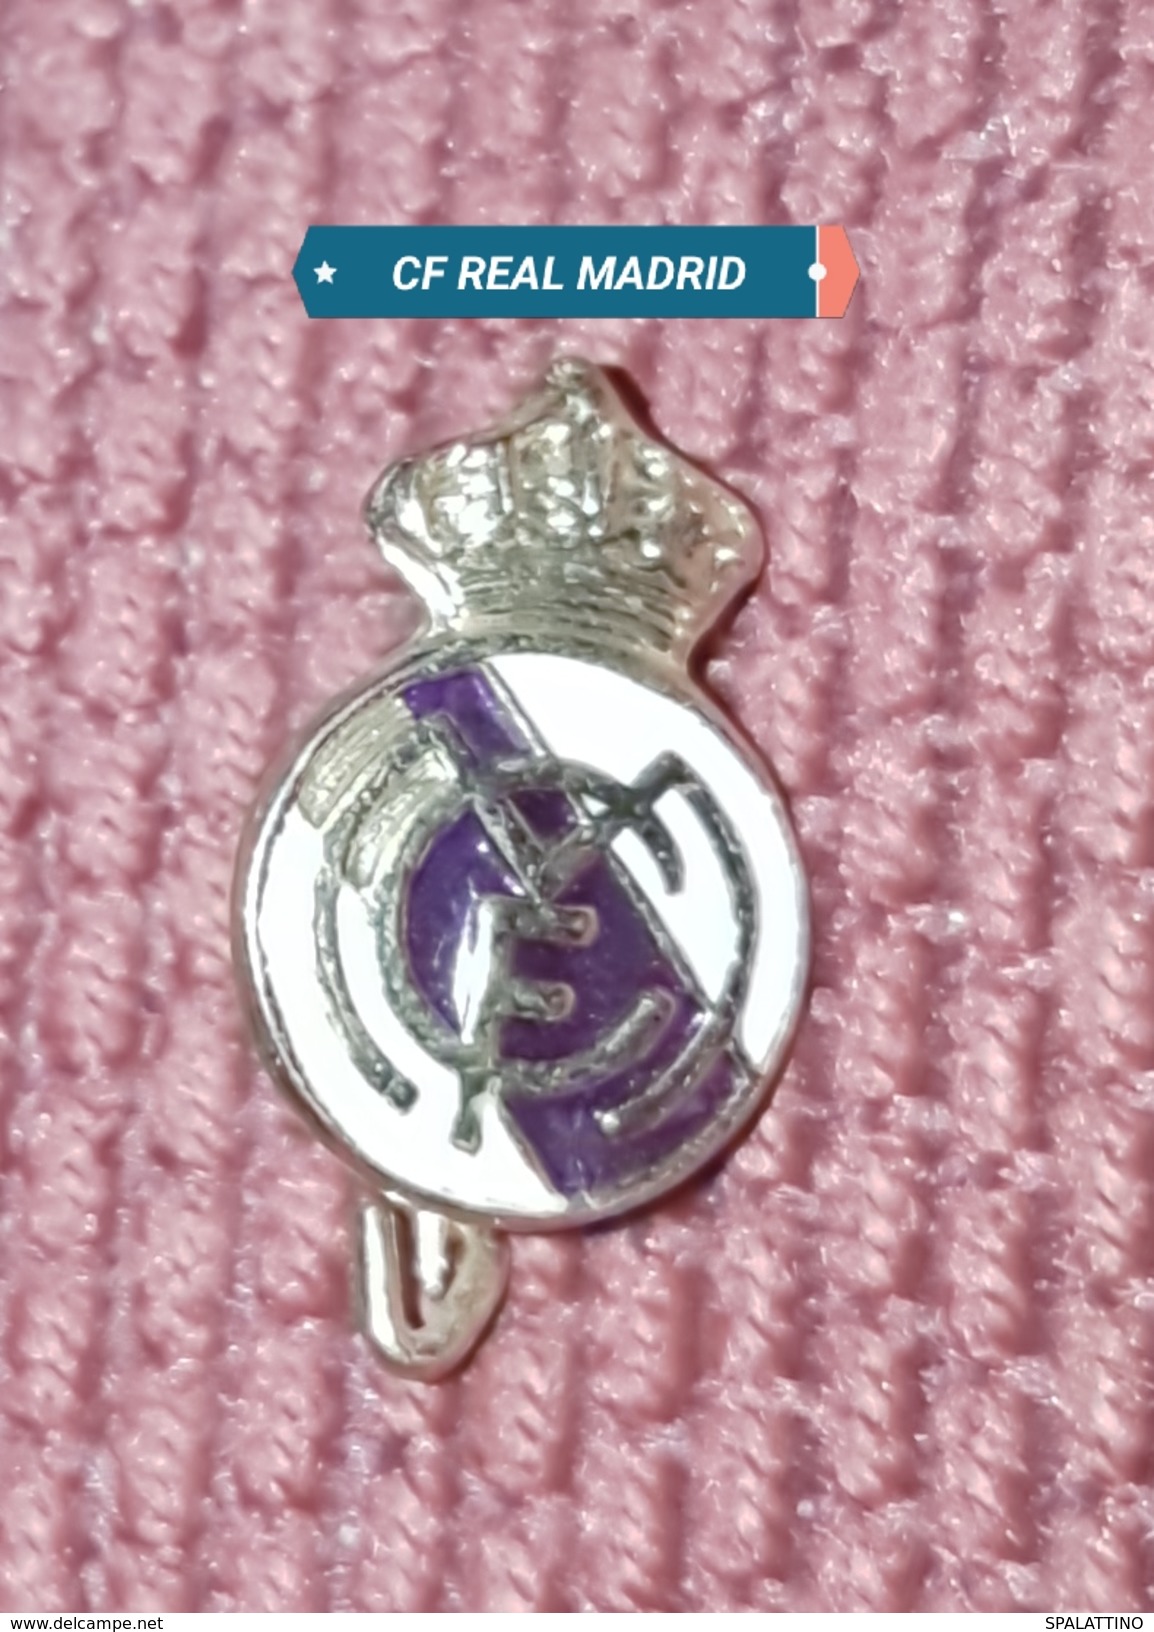 REAL MADRID CF, ORIGINAL PIN, BADGE, SPAIN ESPAÑA, RONALDO - Fussball